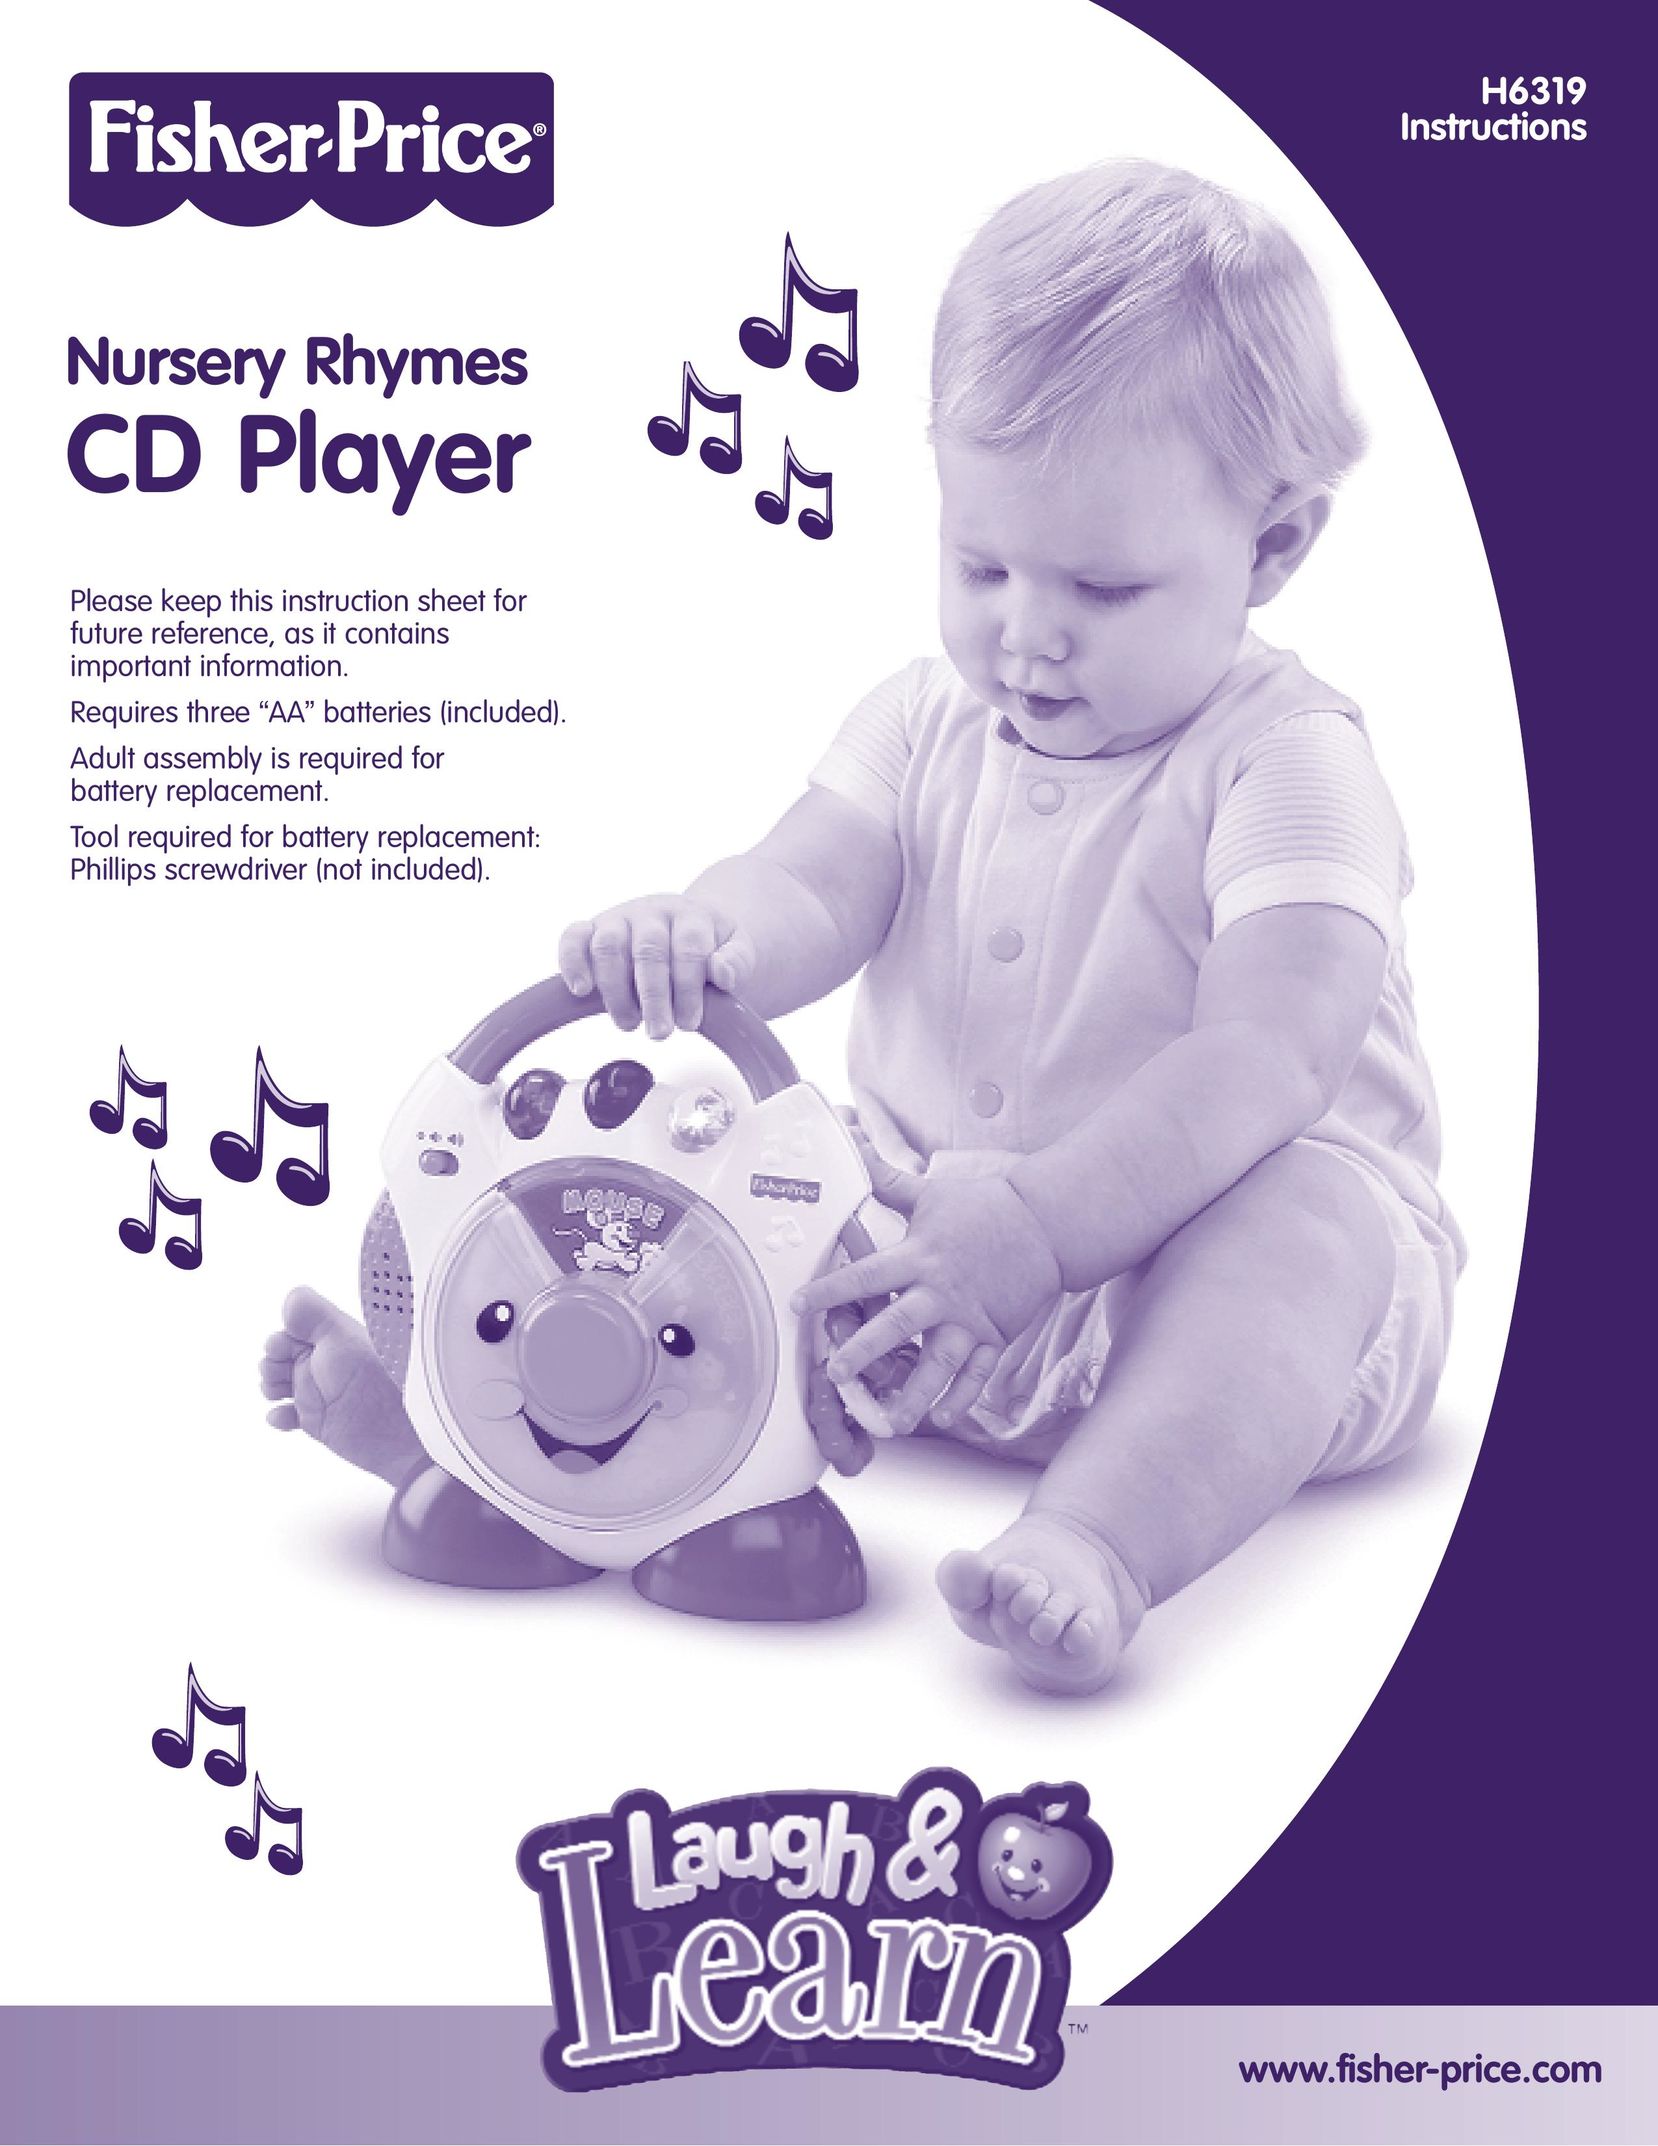 Fisher-Price H6319 CD Player User Manual